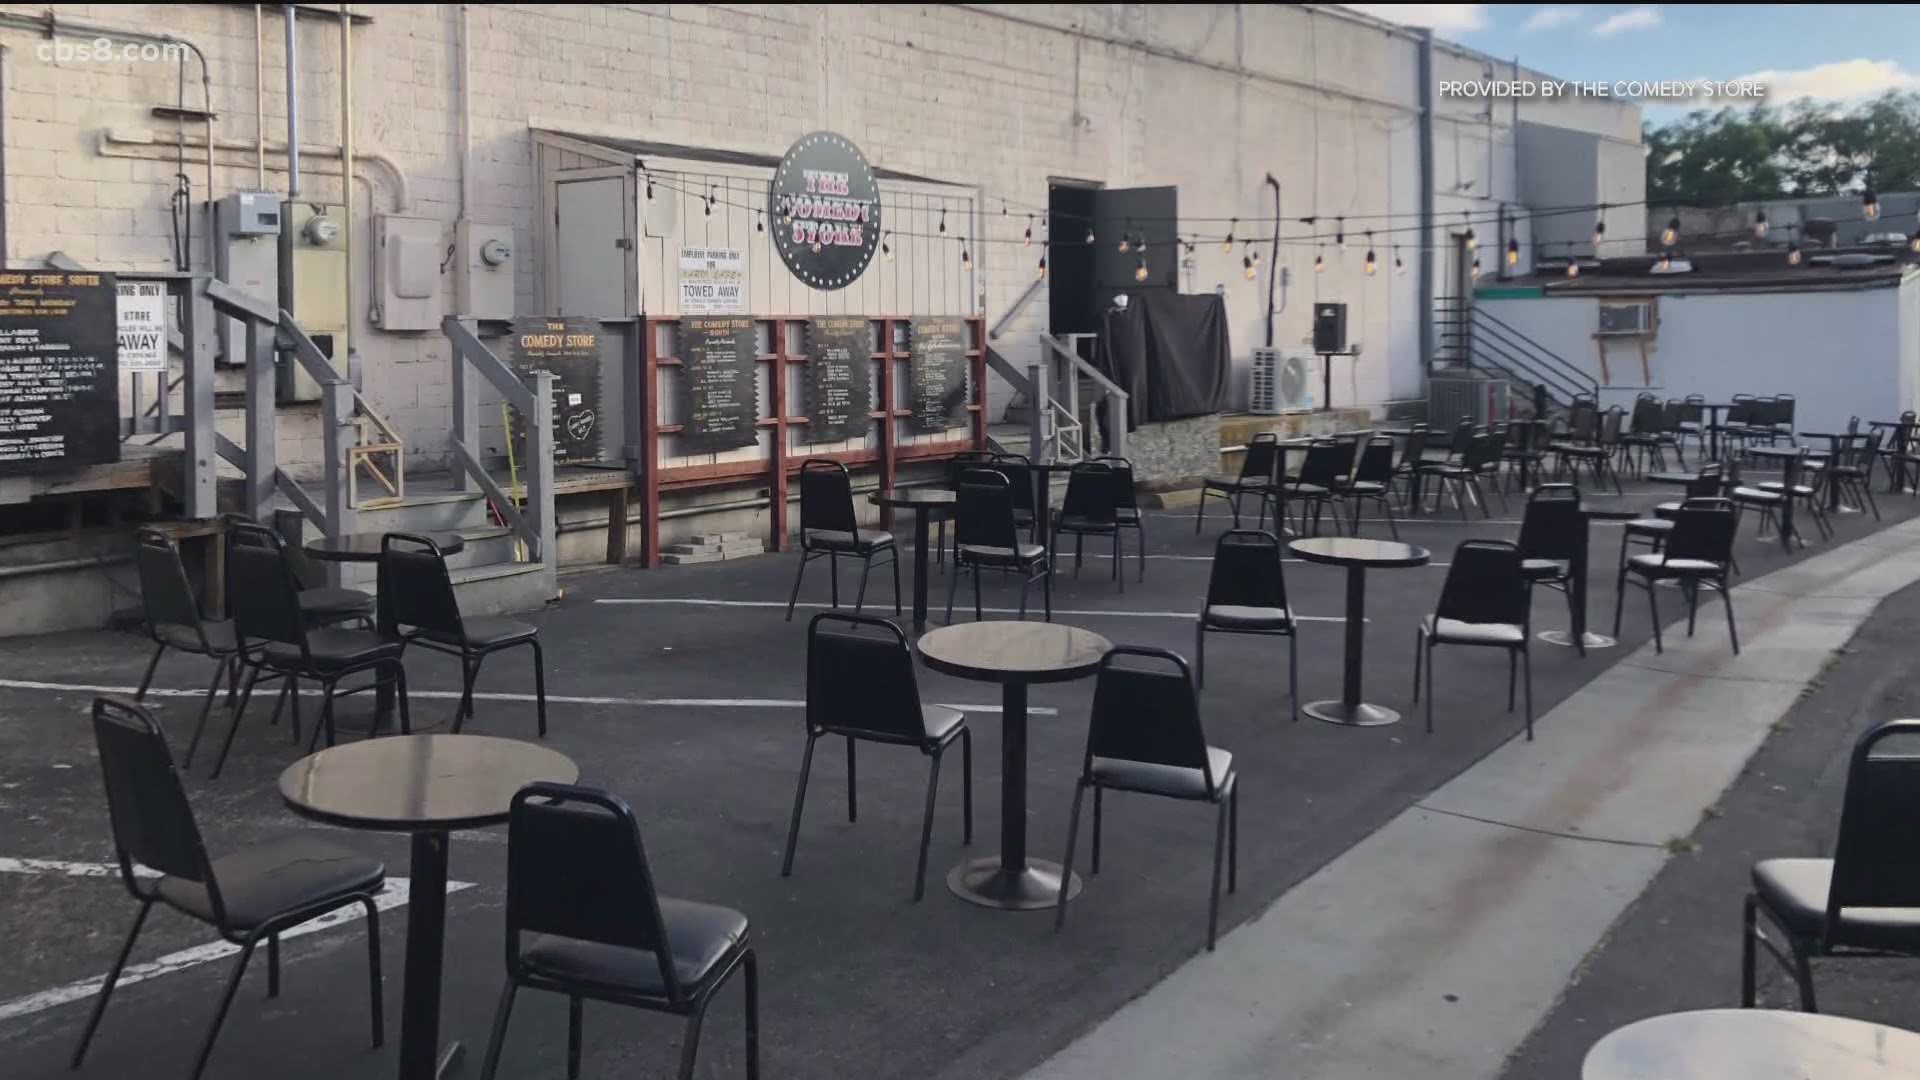 The Comedy Store La Jolla and American Comedy Co. San Diego were shut down on Saturday night.